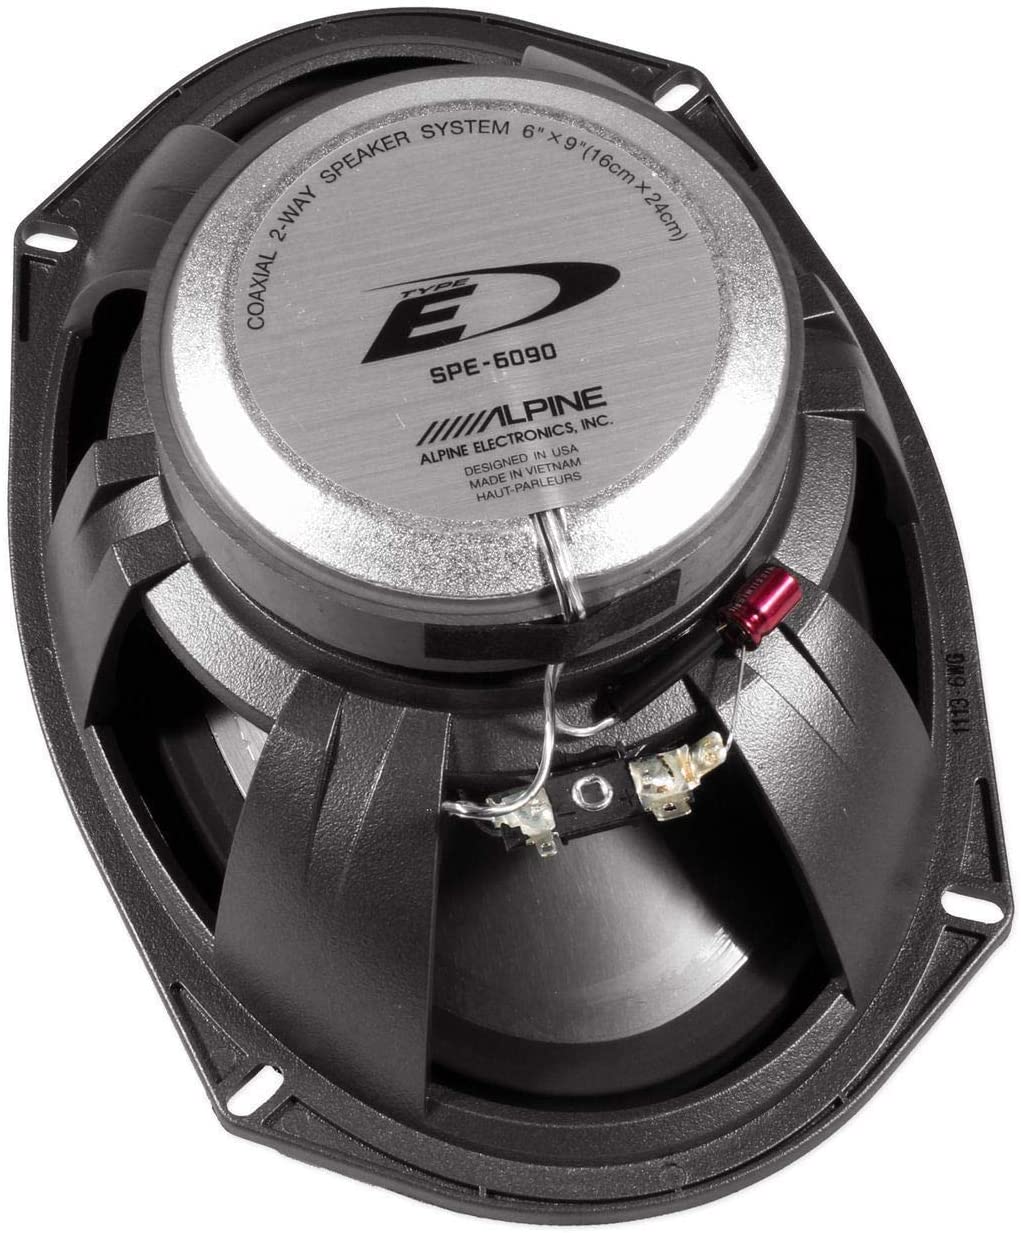 2 Alpine SPE-6090 6" x 9" 2 Way Car Stereo Speakers Totaling 600 Watts Bundle with 6x9" Flat Sealed Speaker Box Enclosures